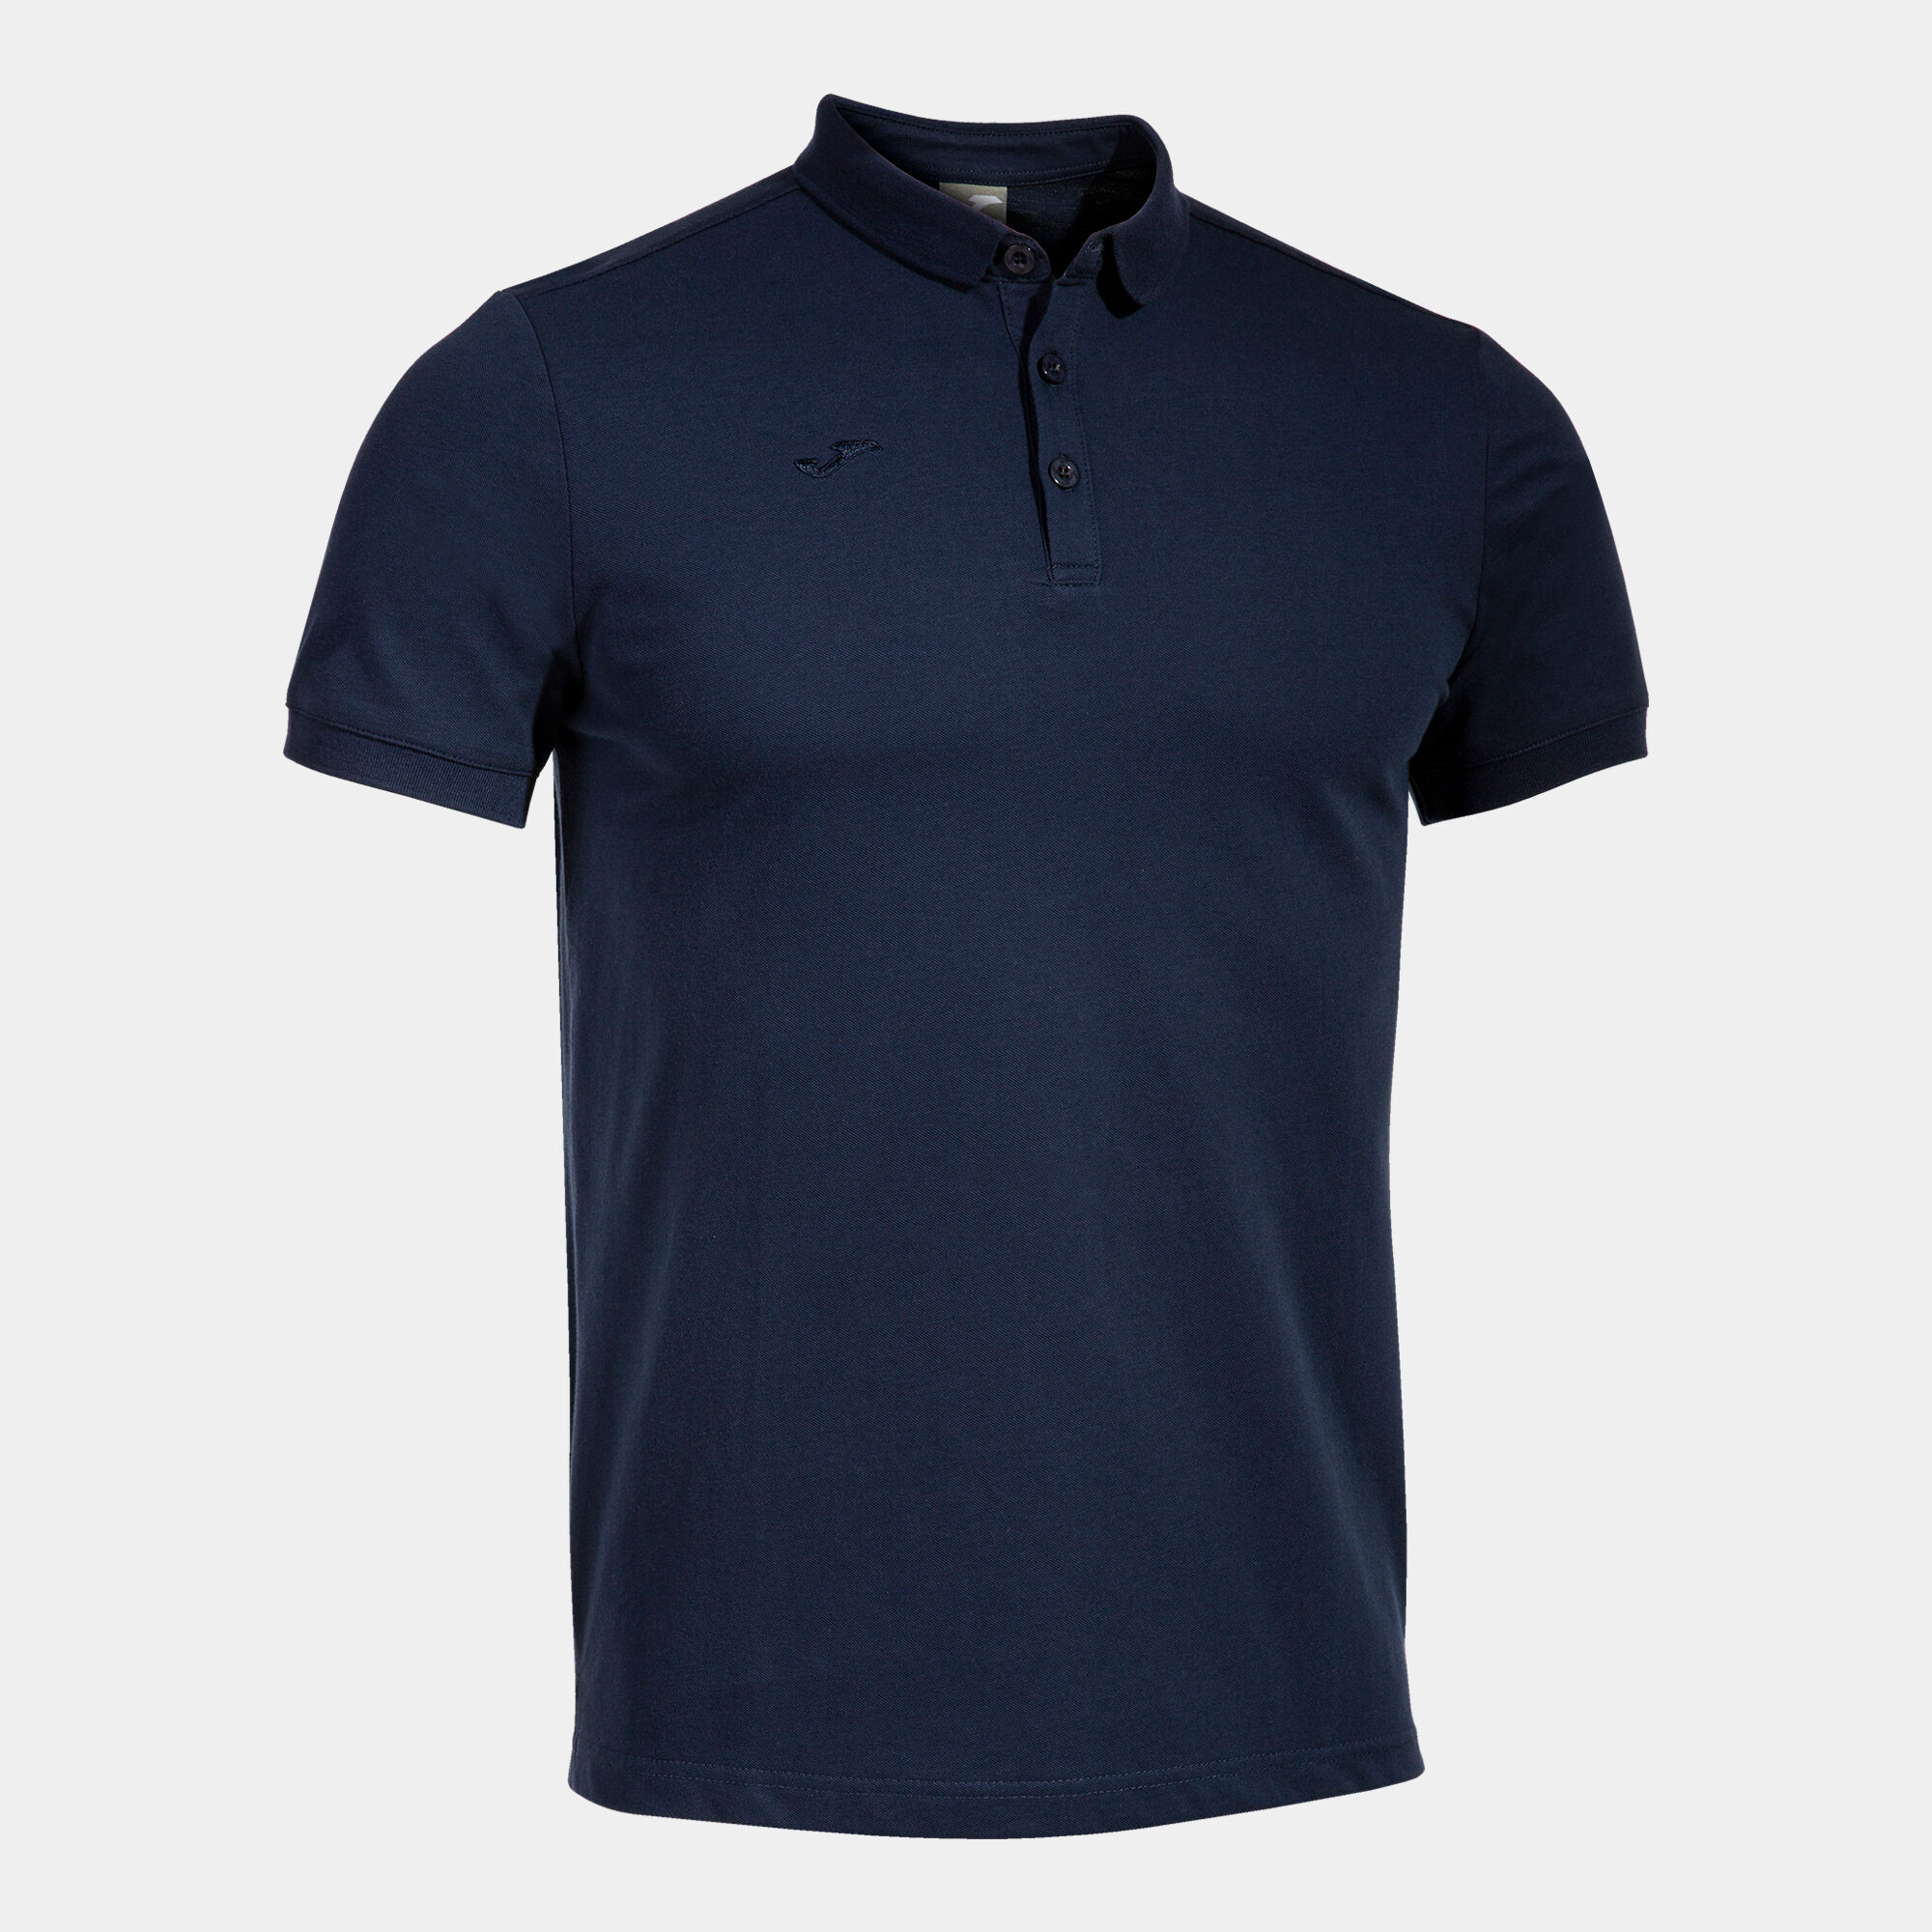 Polo shirt short-sleeve man Pasarela III navy blue